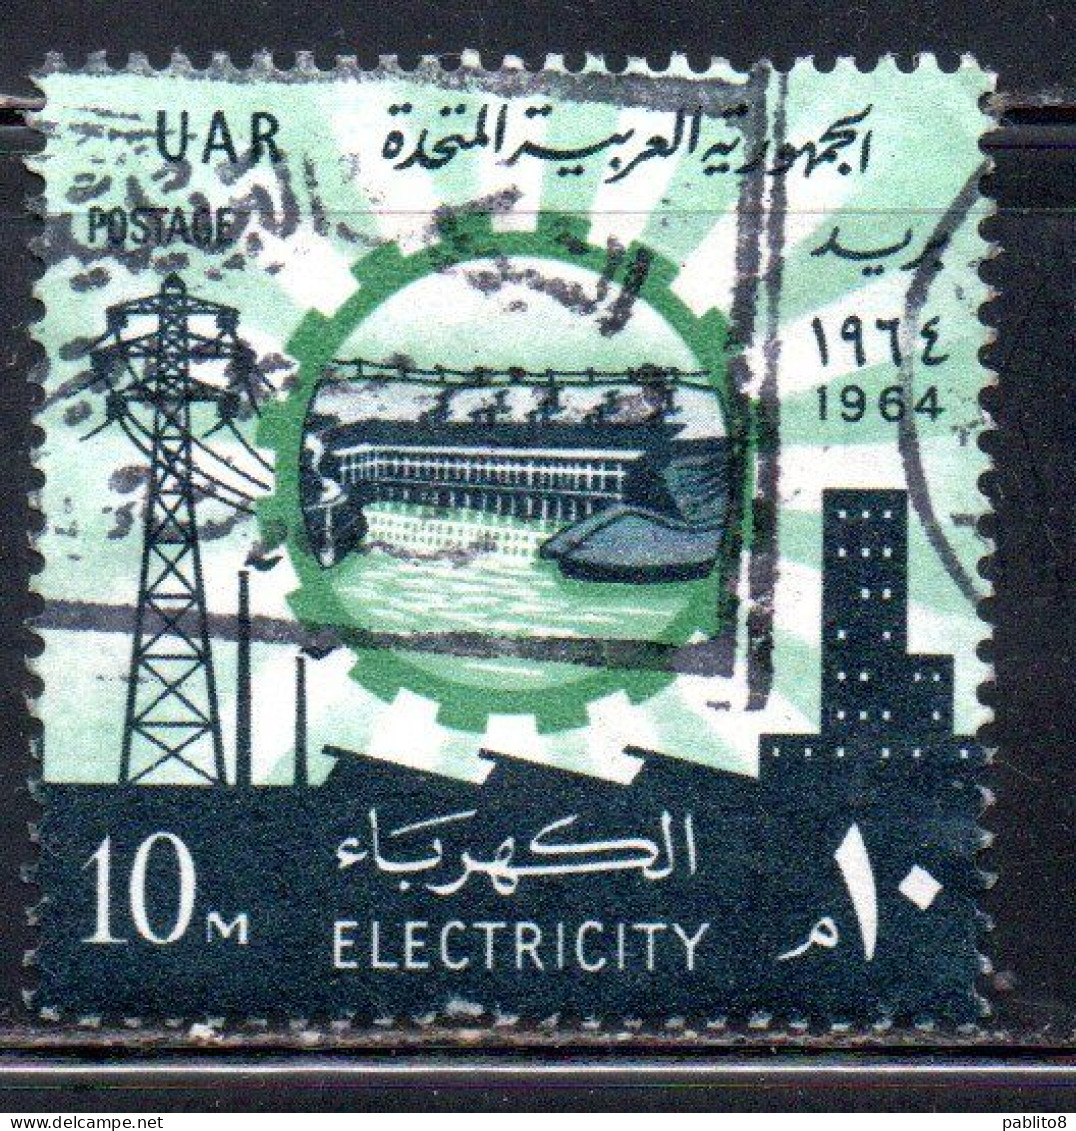 UAR EGYPT EGITTO 1964 ELECTRICITY ASWAN HIGH DAM HYDROELICTRIC POWER STATION LAND RECLAMATION 10m USED USATO - Gebruikt